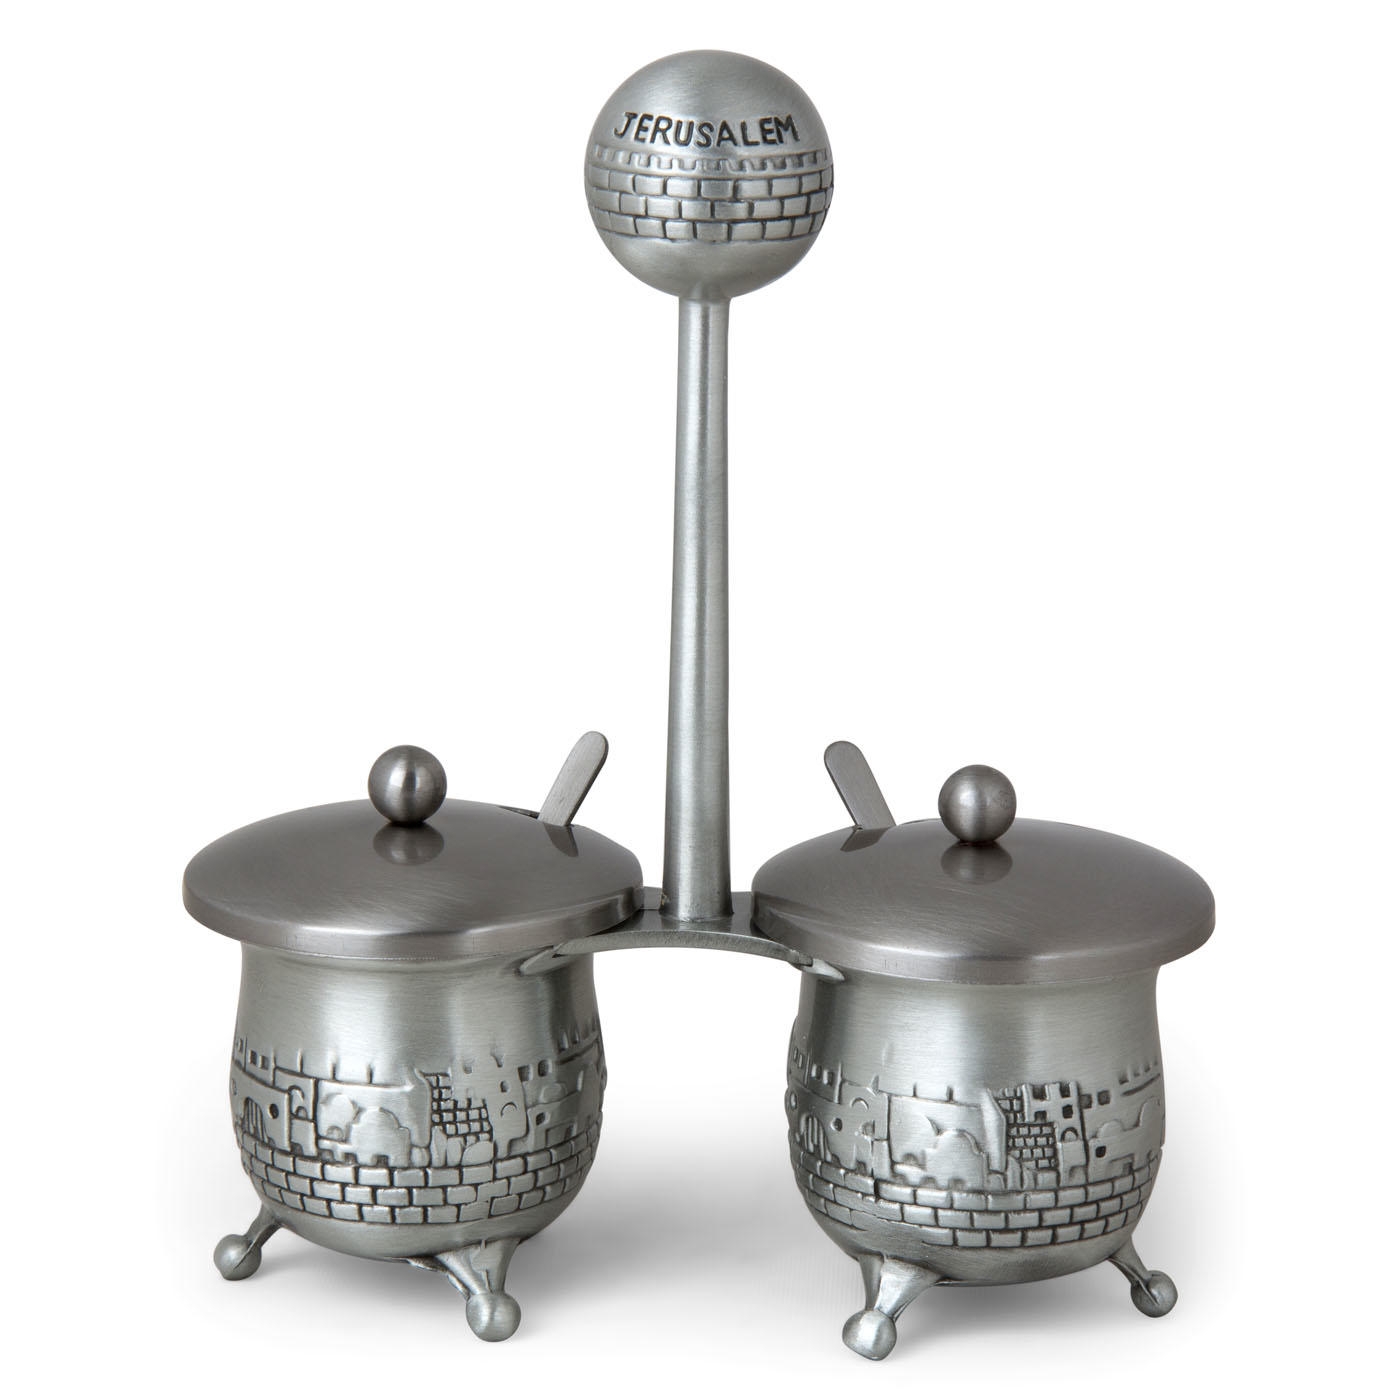 Pewter Salt and Pepper Pots with Spoons - Jerusalem Motif - 1